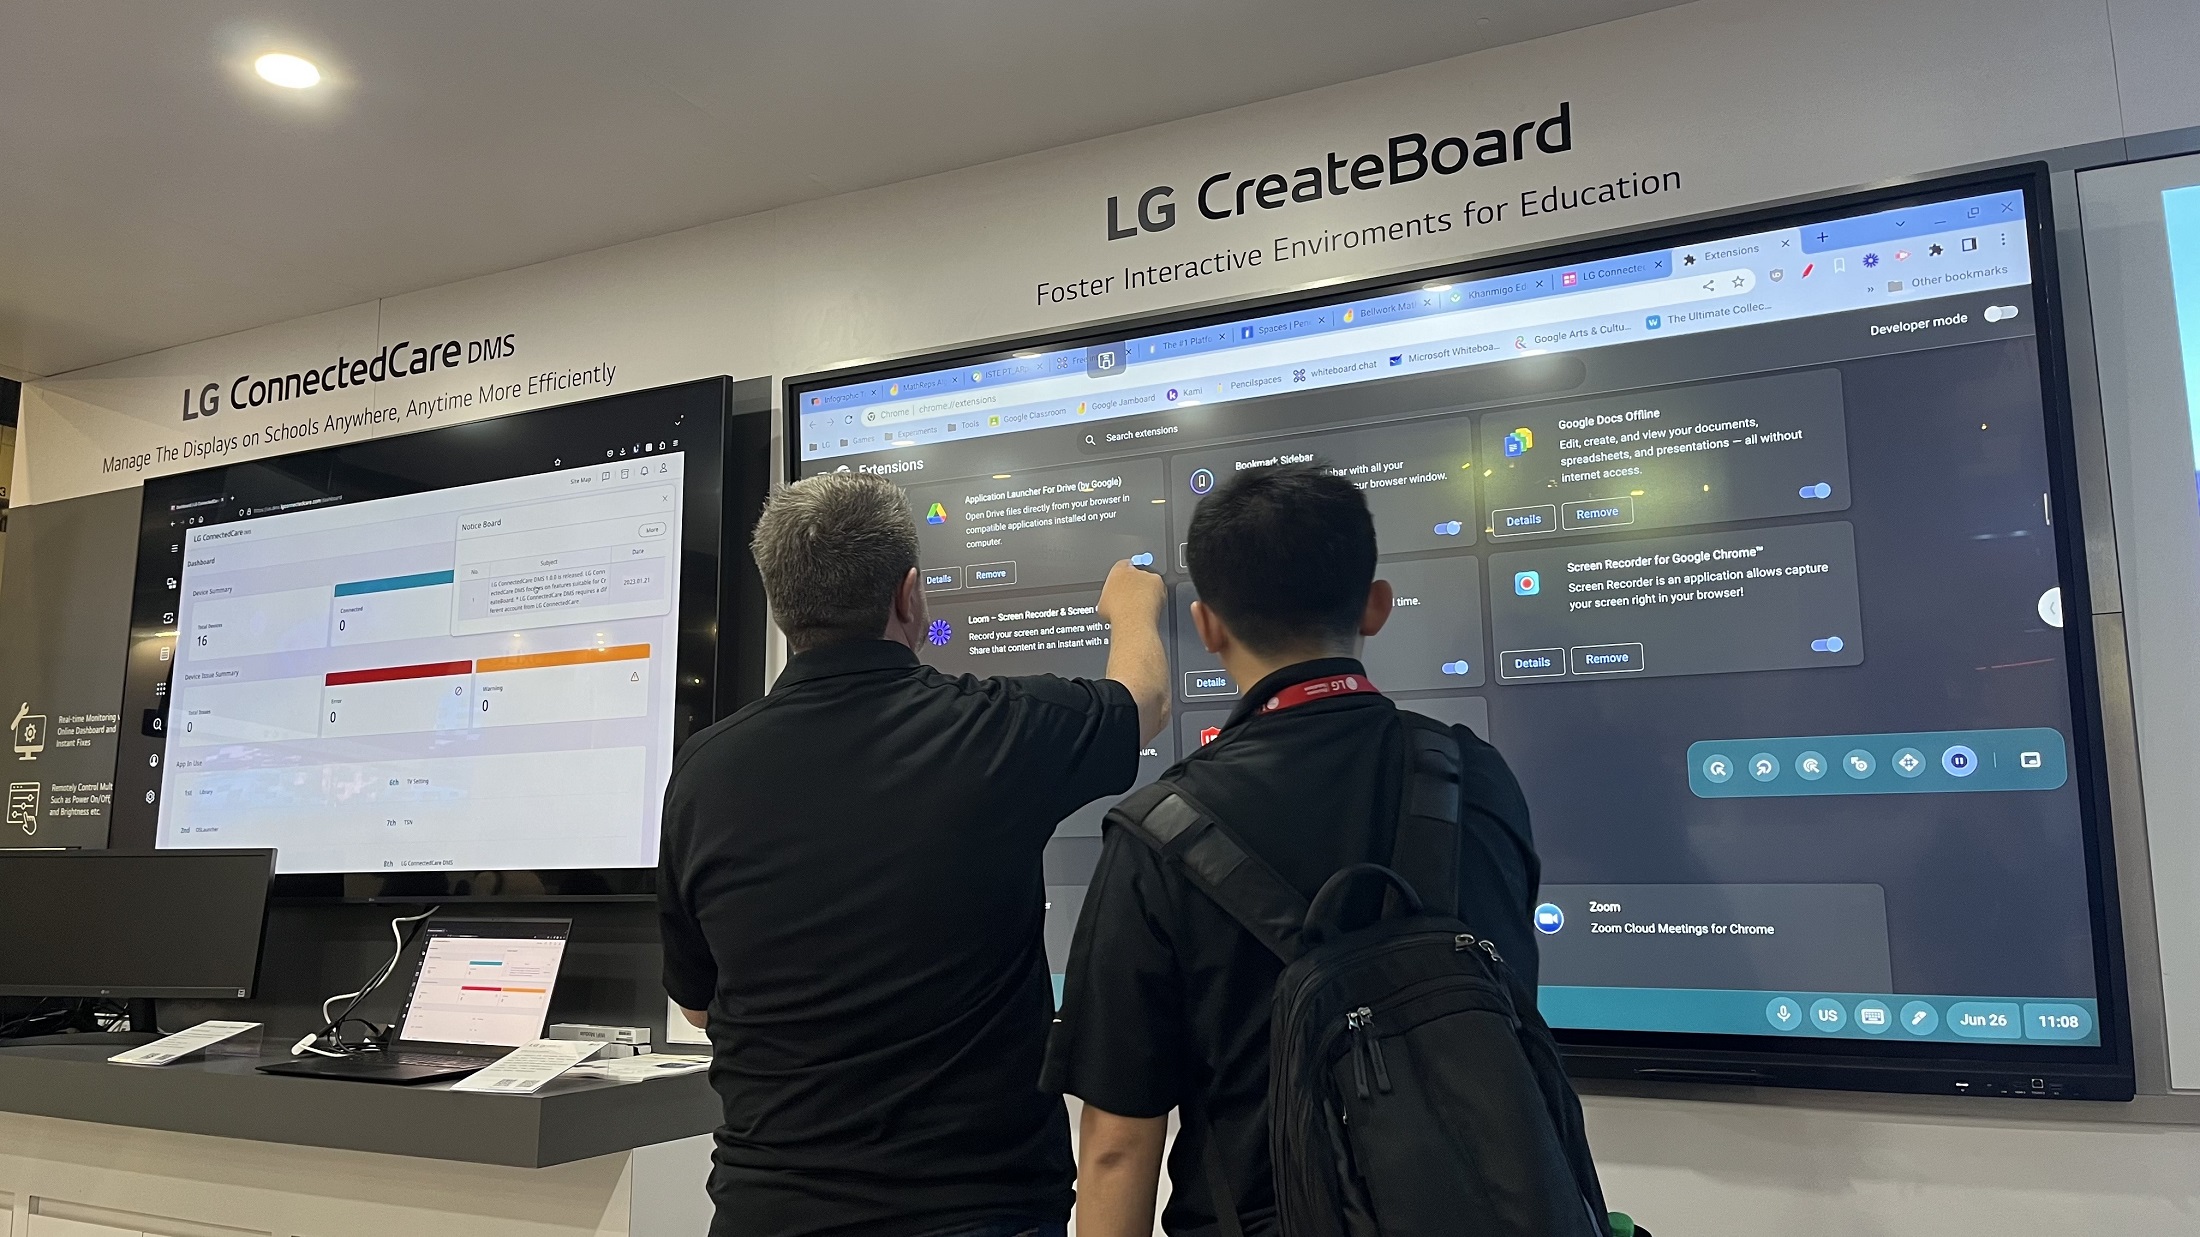 A man pointing at LG CreateBoard screen